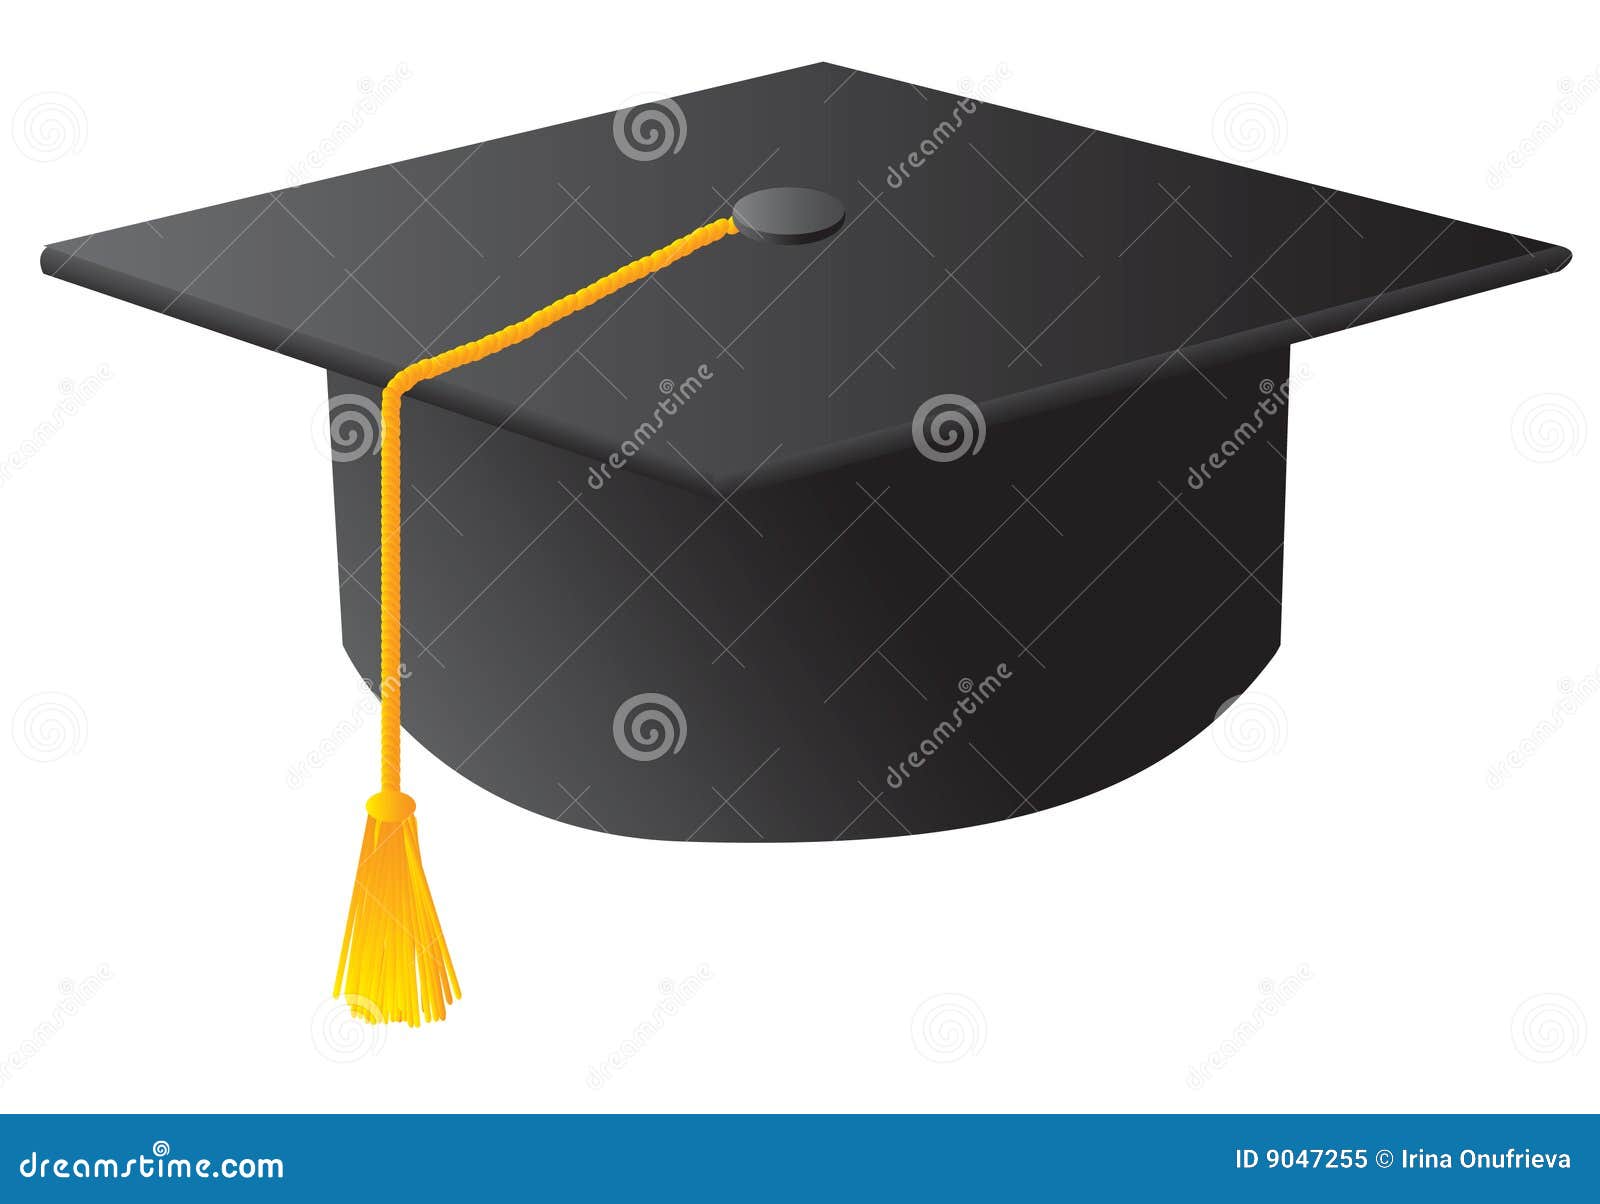 The Black Student Graduation Hat Stock Vector - Illustration of ...